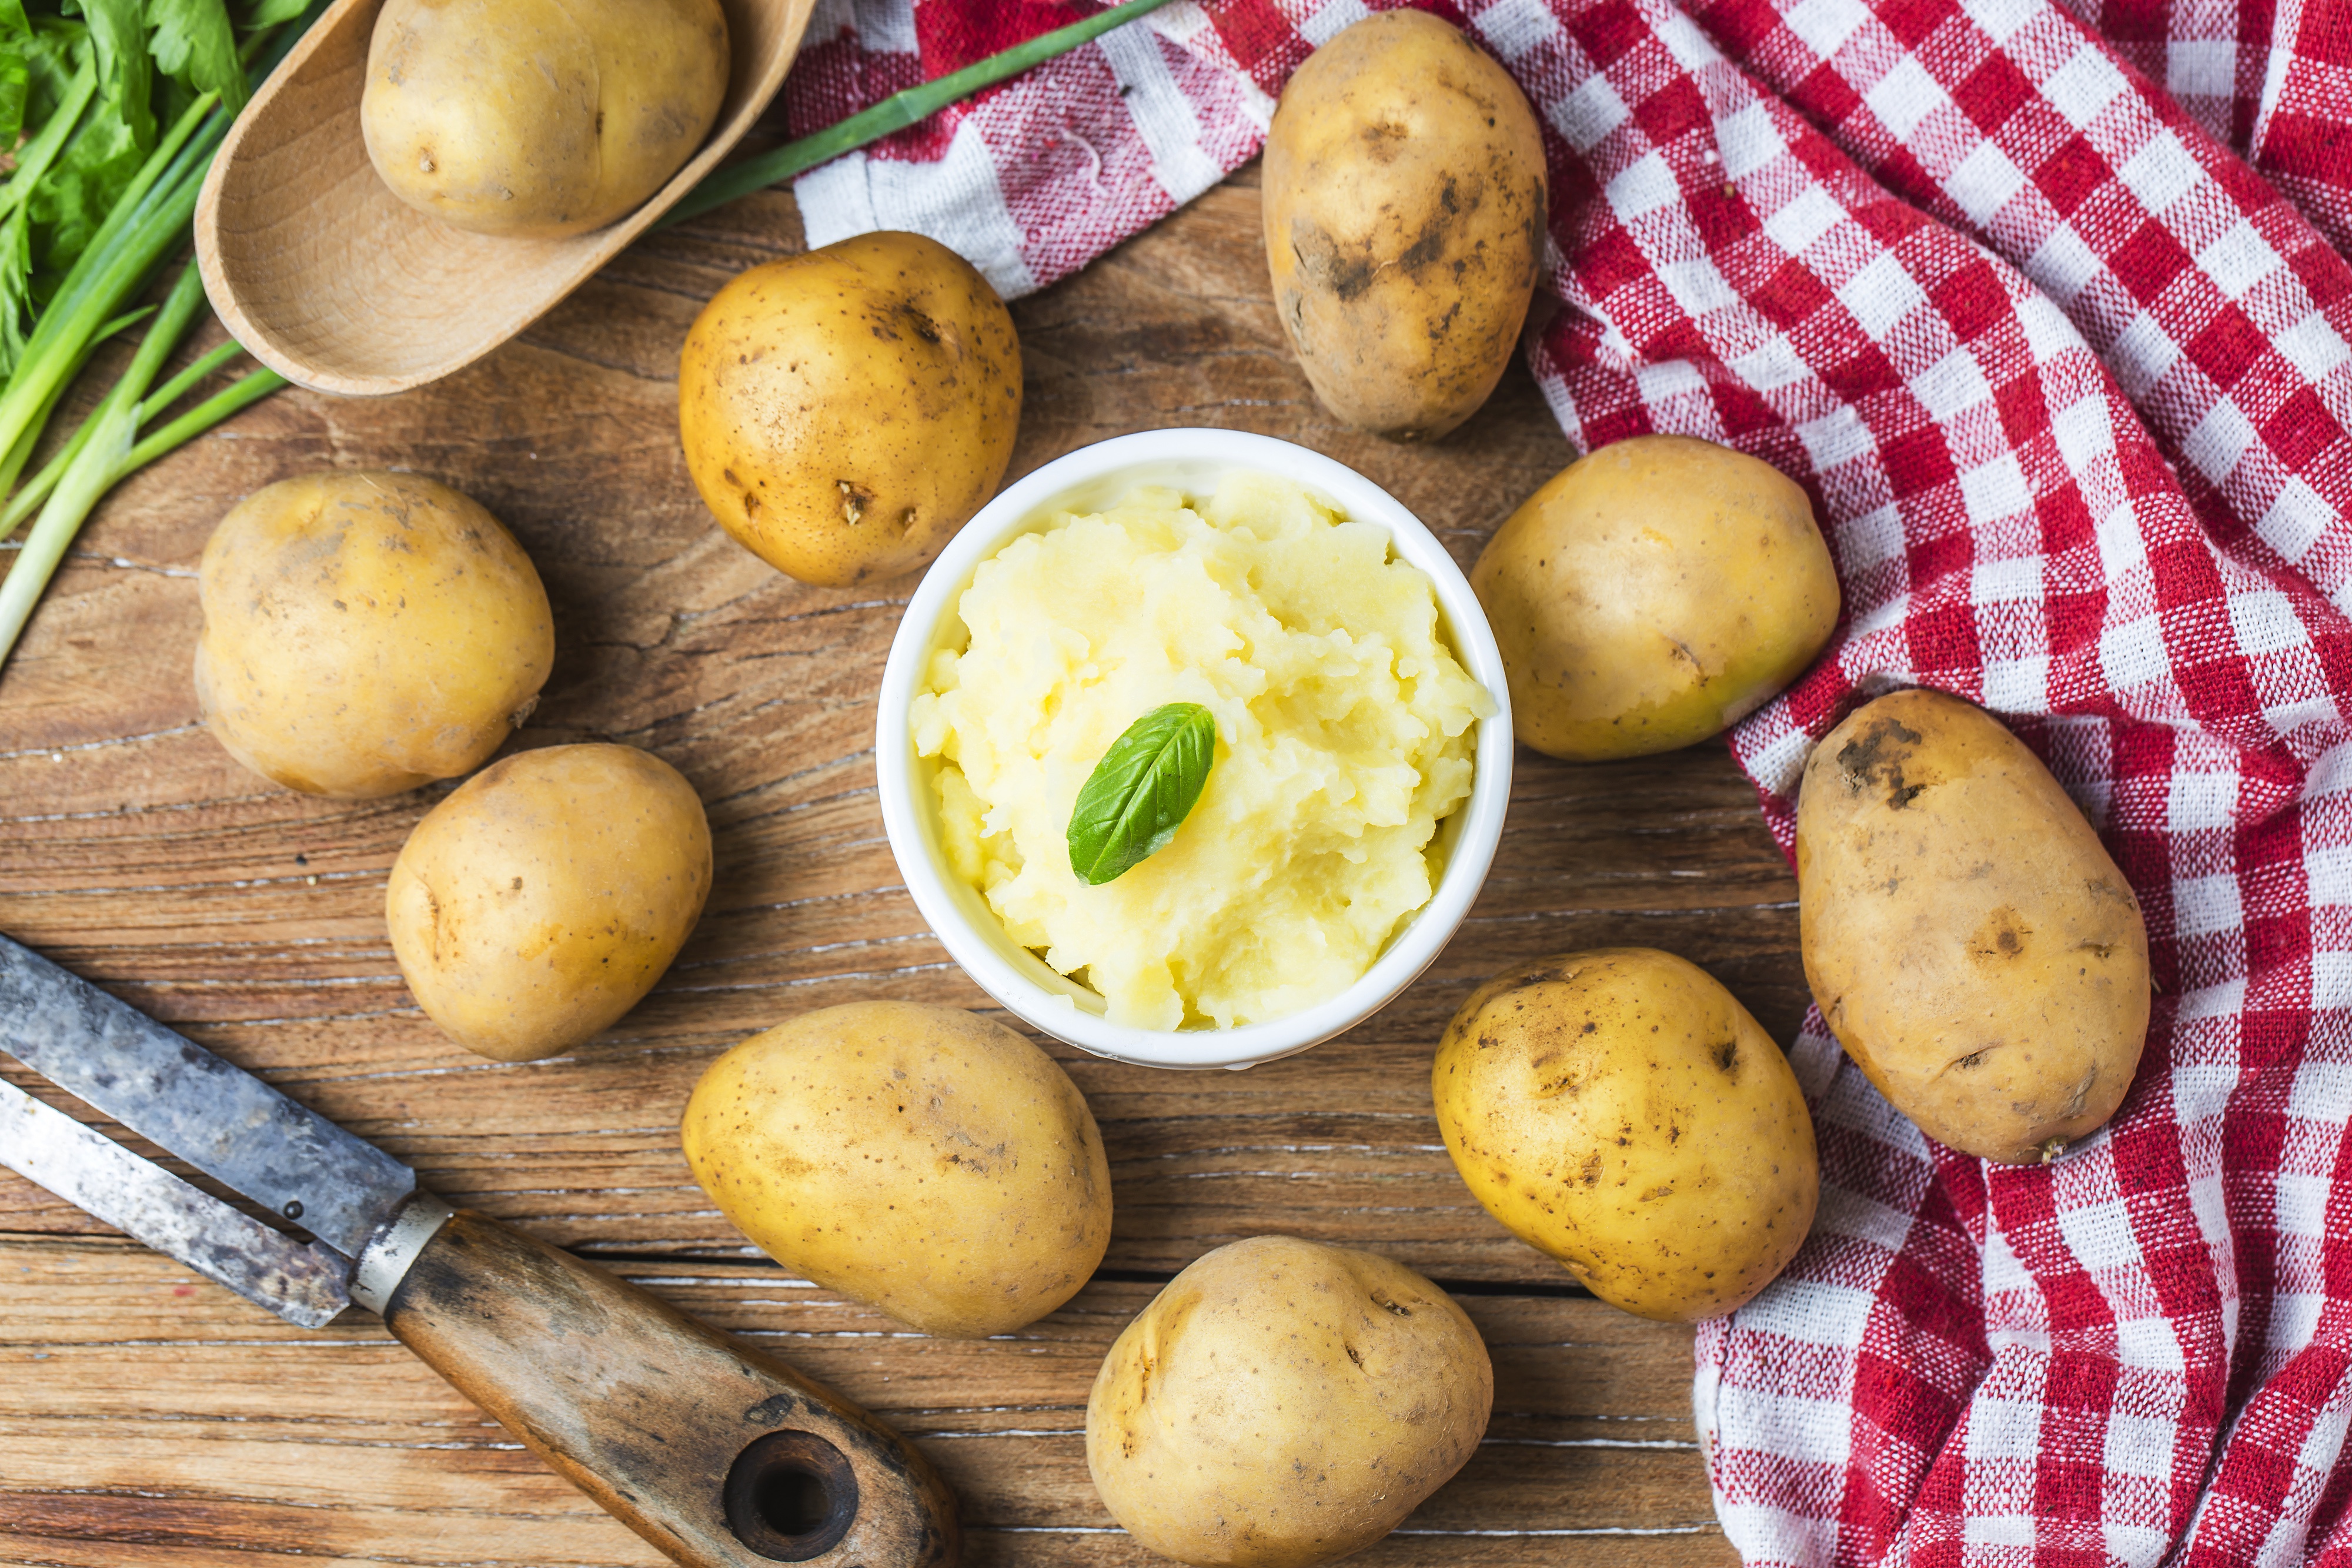 Potatoes picture. Картофель. Картофель продукты. Картошка картинка. Картофель на столе.